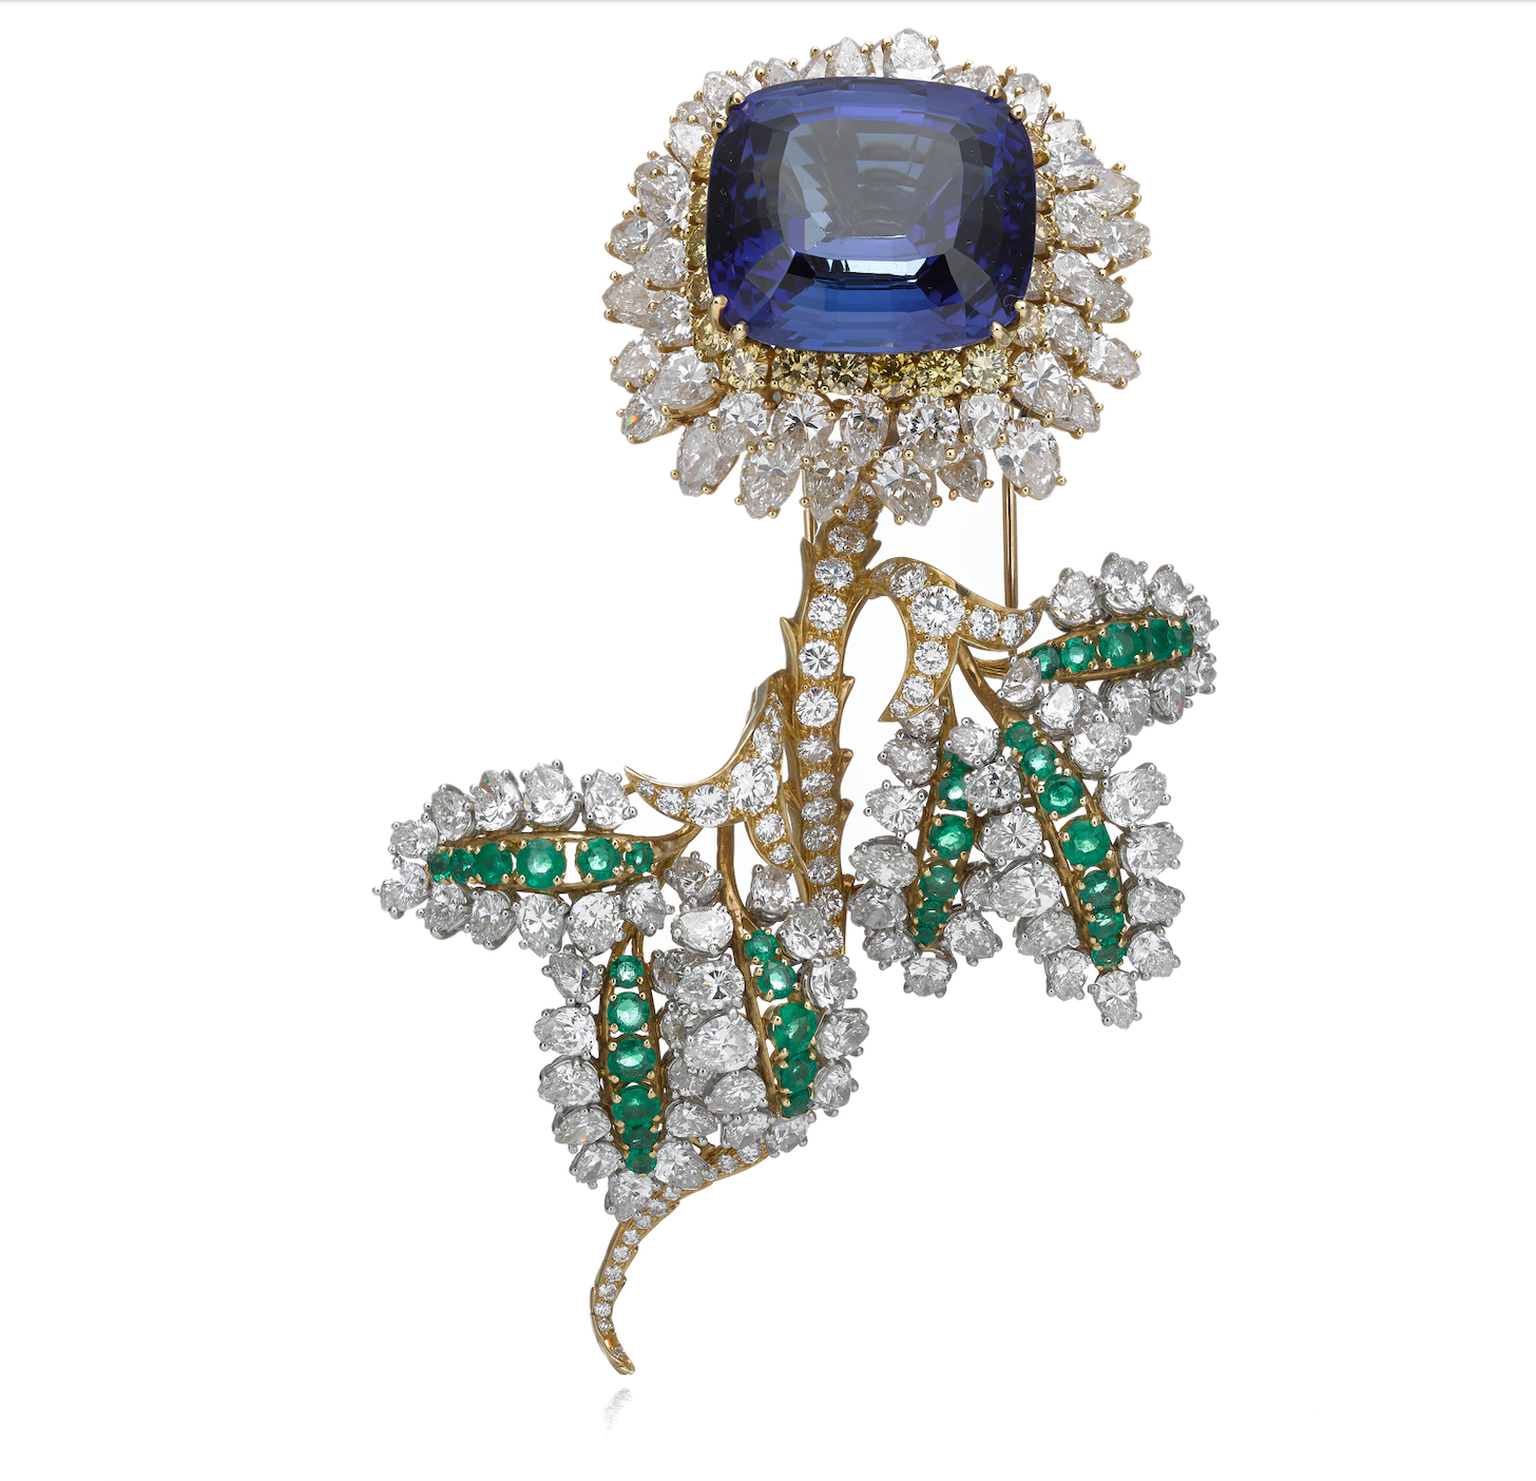 Donald Claflin for Tiffany & Co brooch with tanzanite, emeralds, and diamonds, 1968